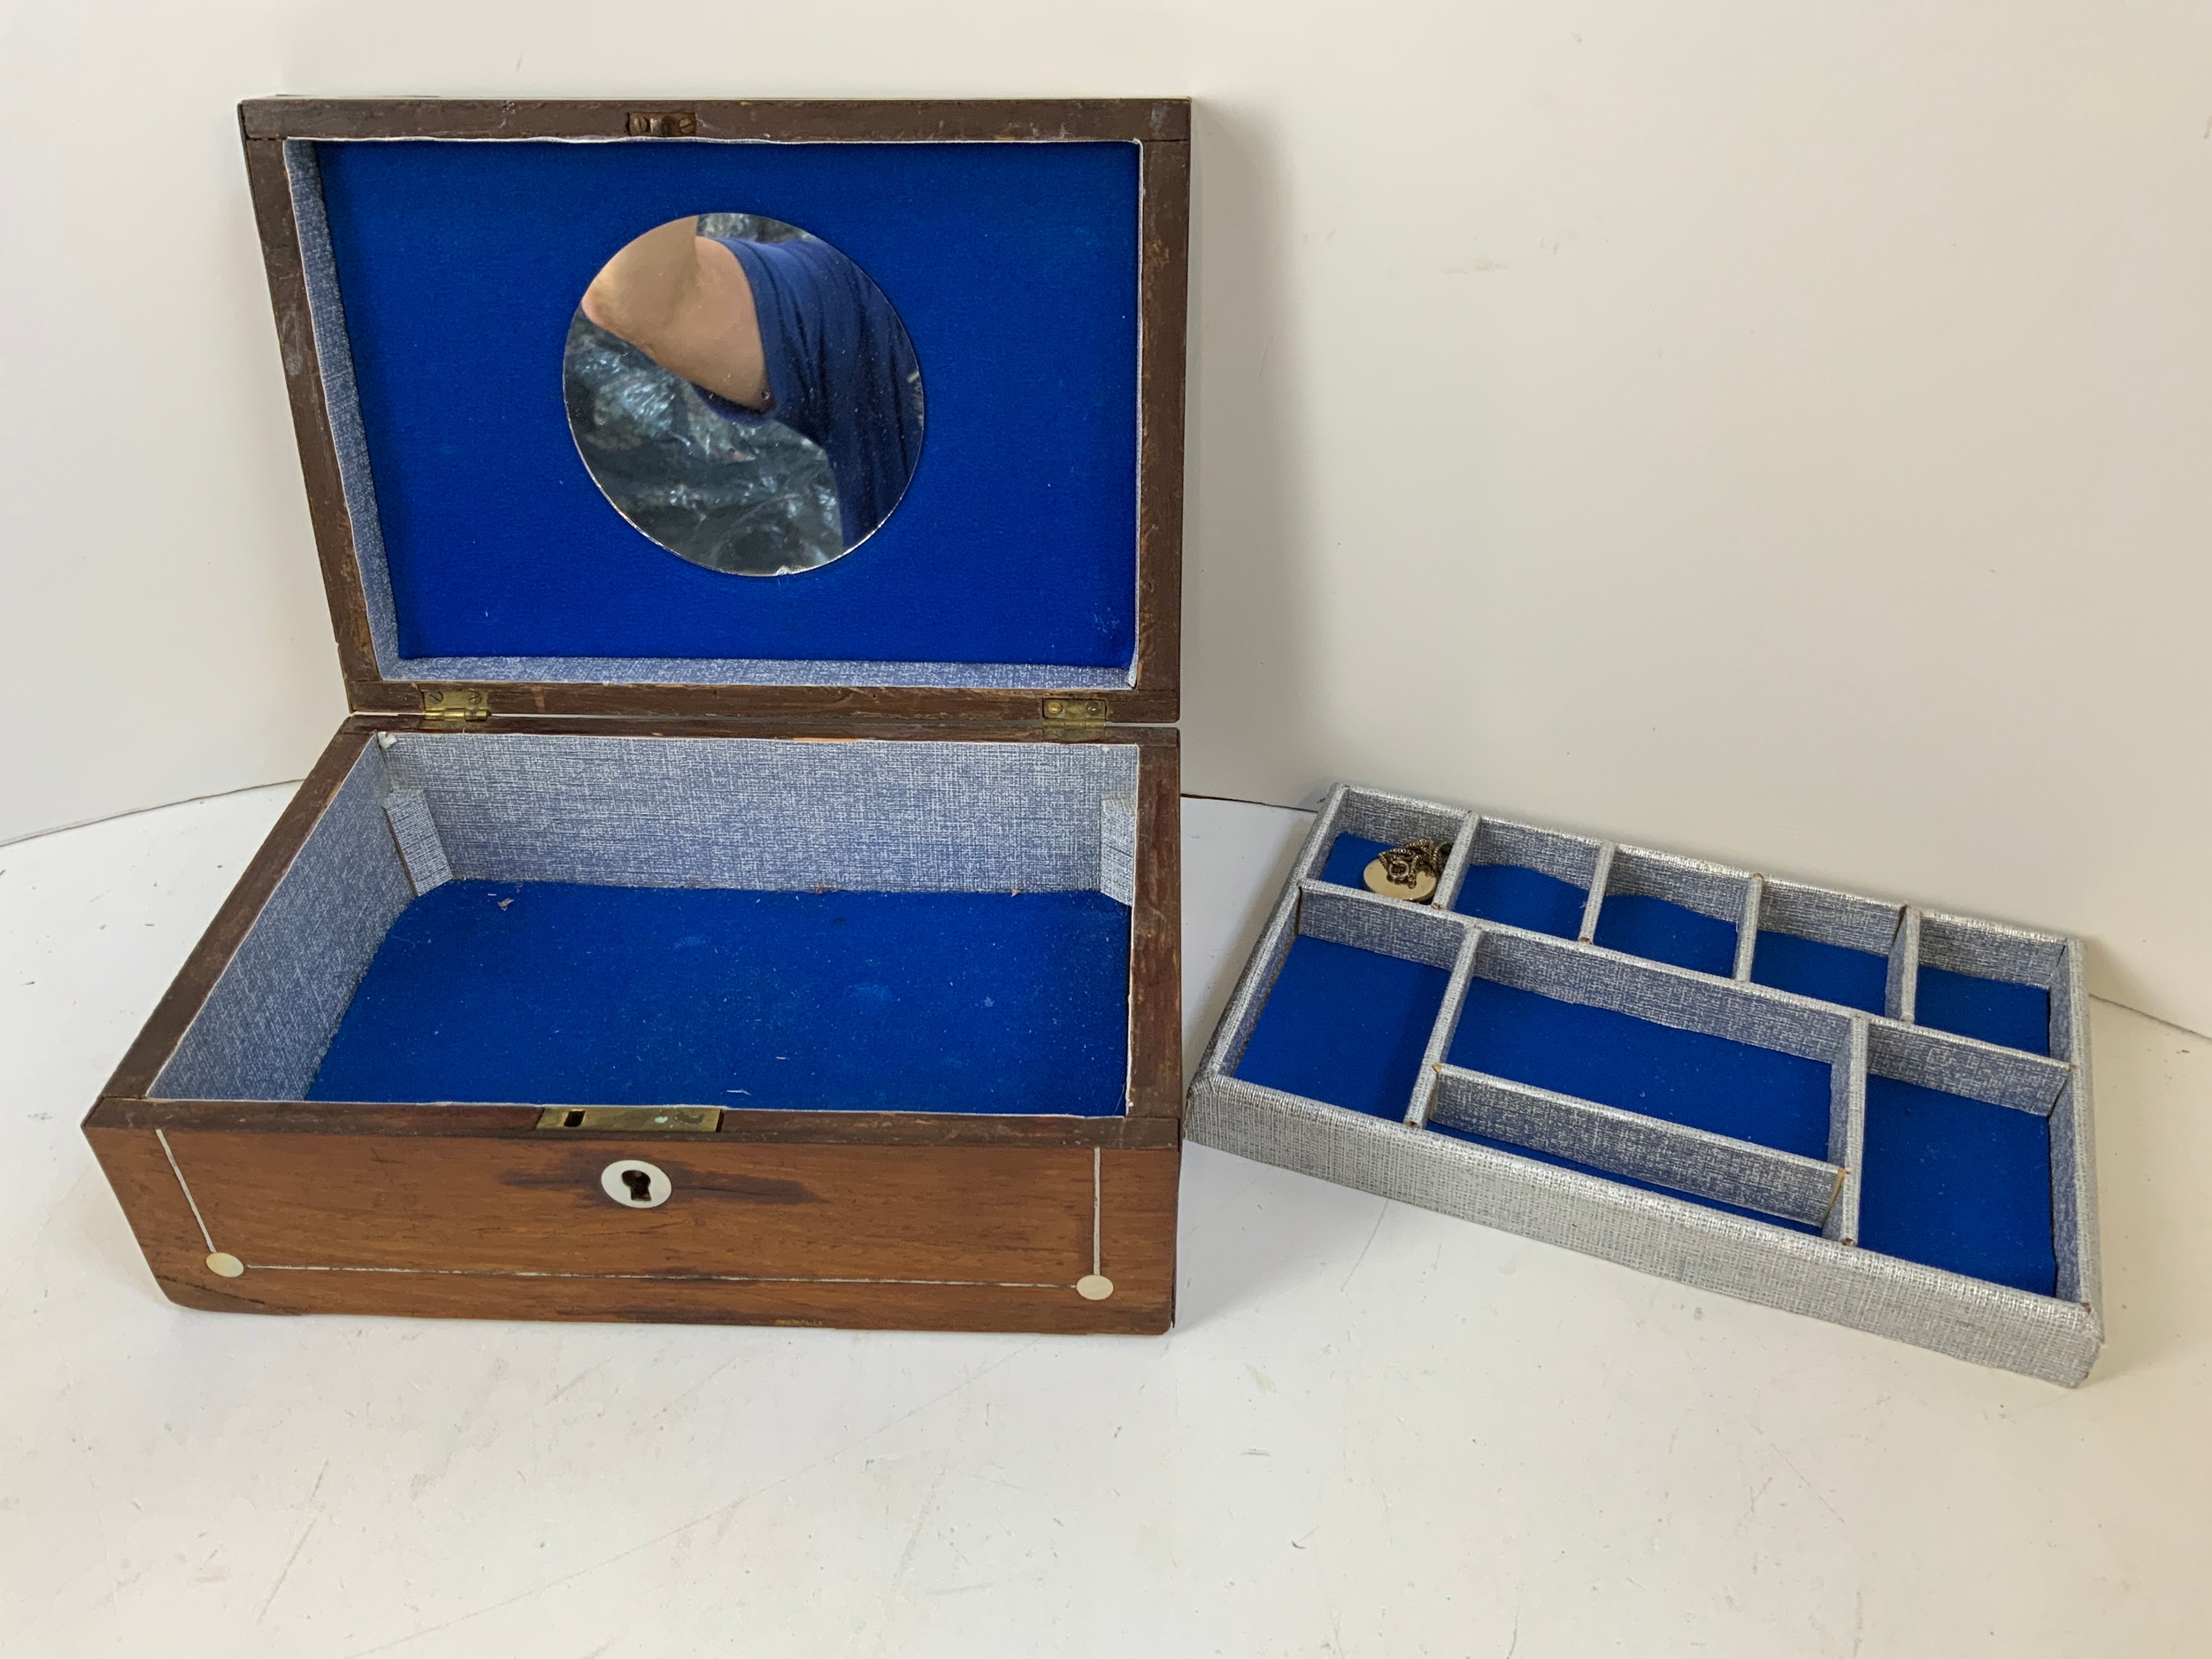 Rosewood Trinket Box with Key - Image 2 of 2